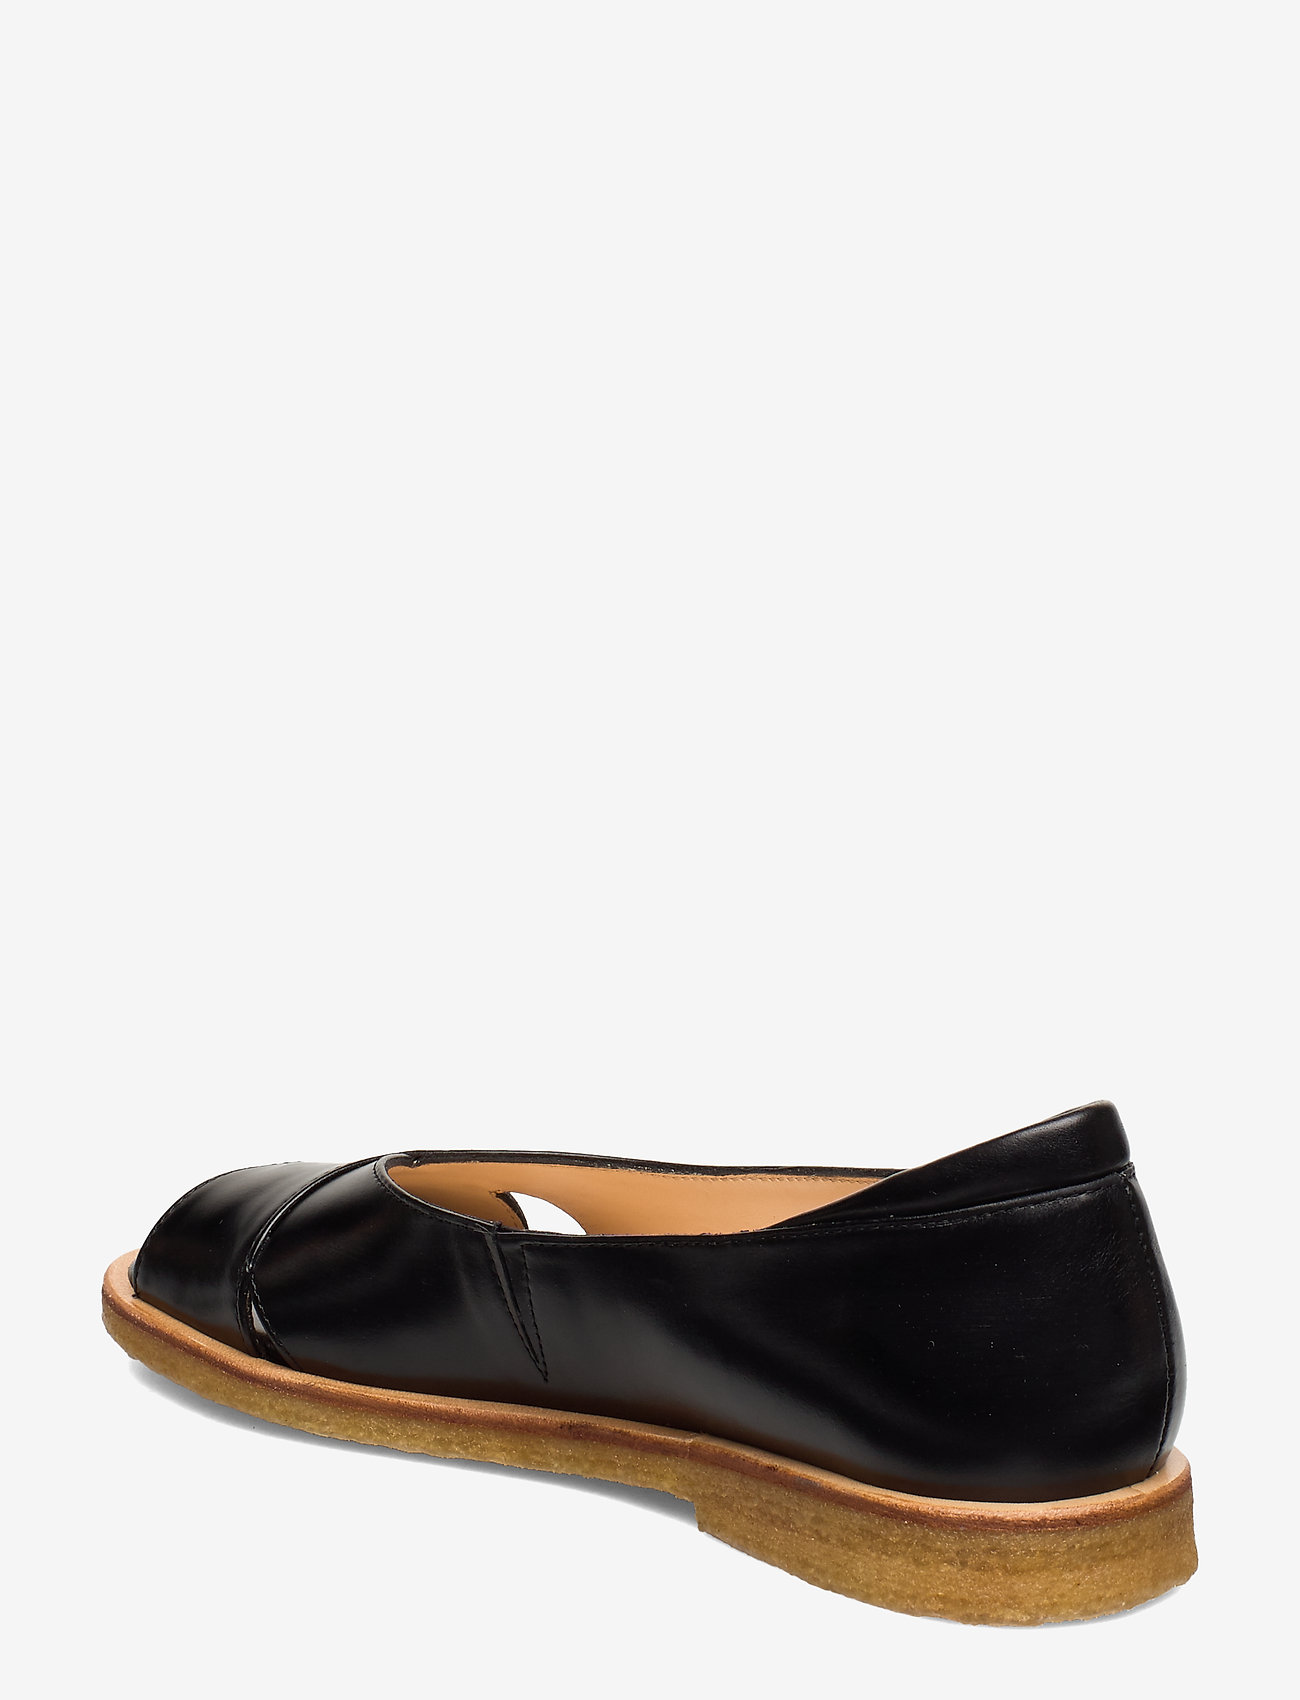 ANGULUS - Sandals - flat - open toe - clo - flade sandaler - 1835/001 black/black - 1